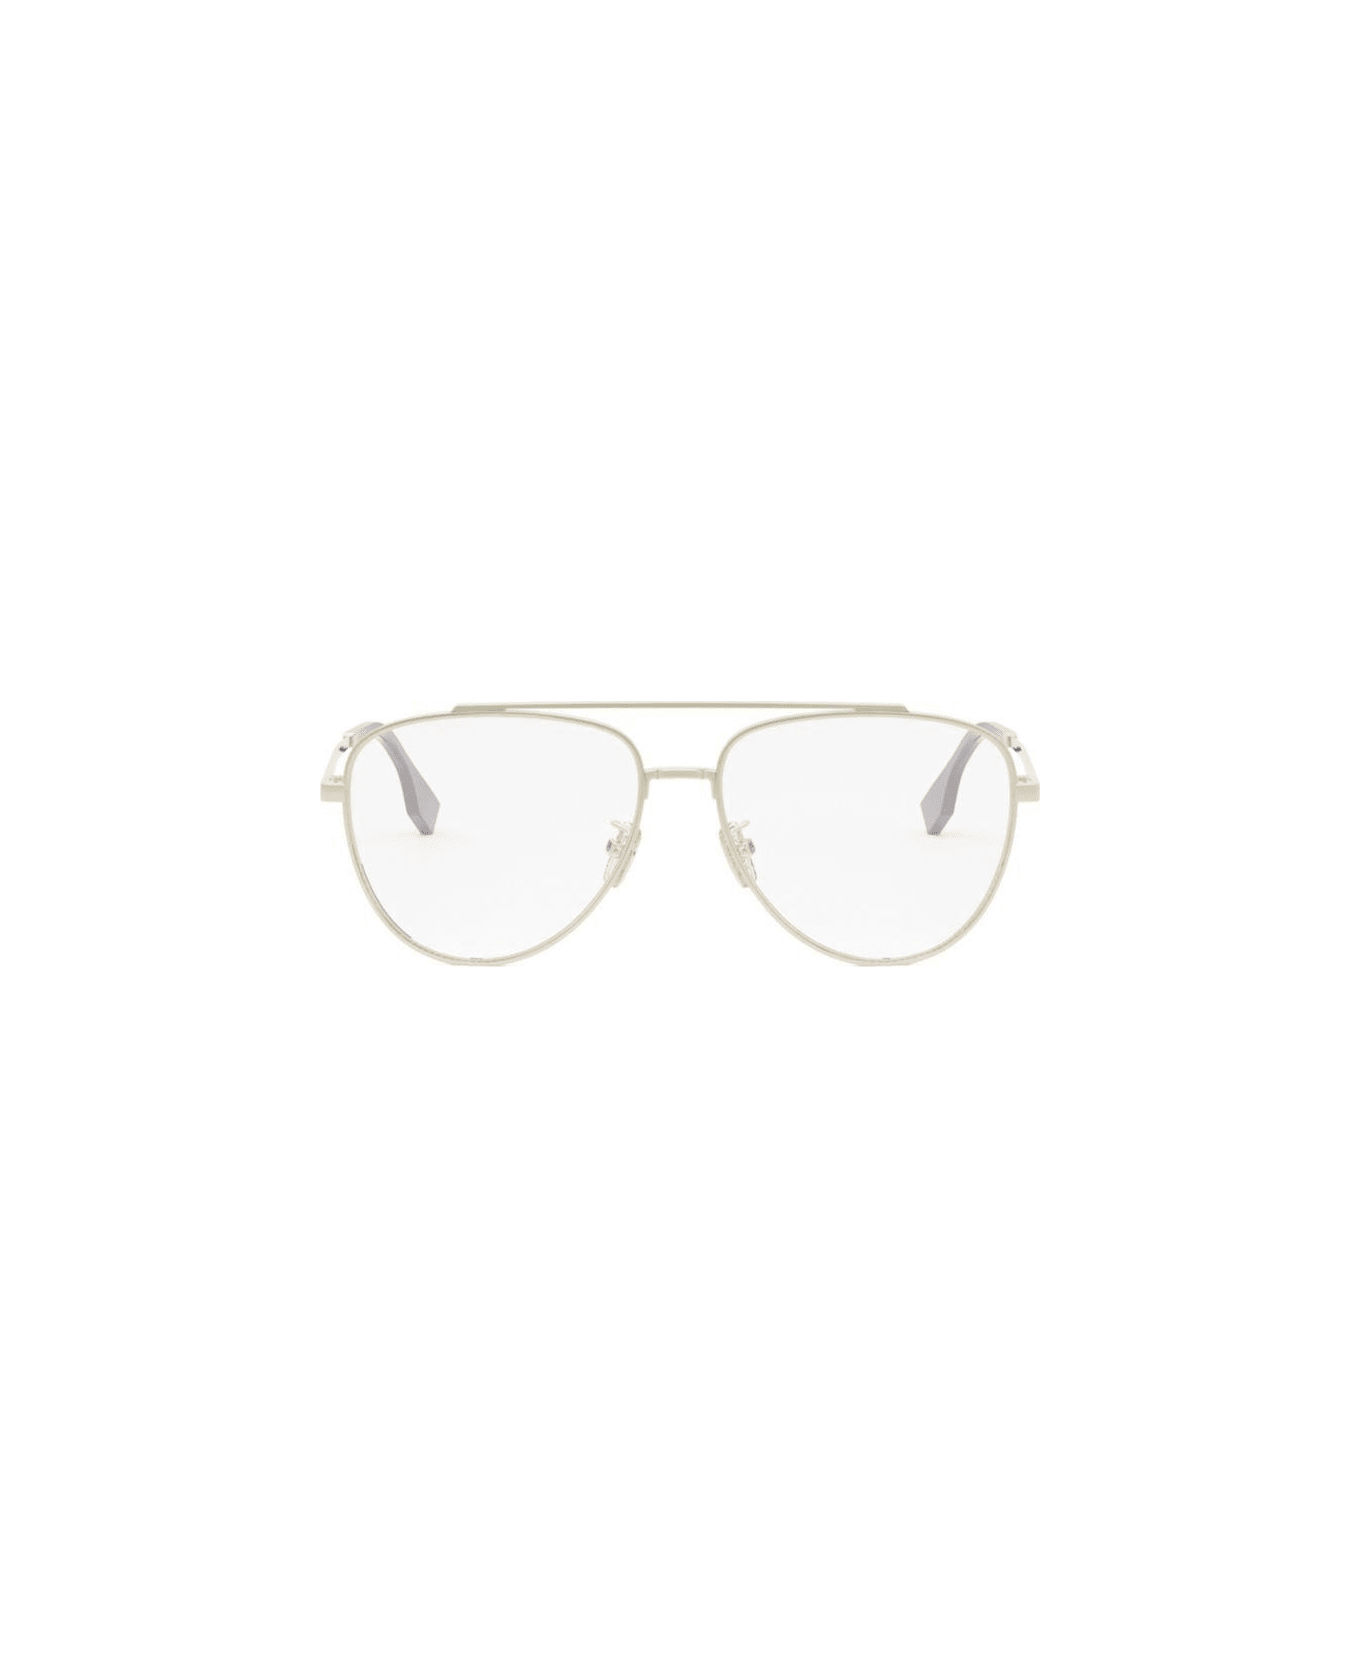 Fendi Eyewear Aviator Frame Glasses - 032